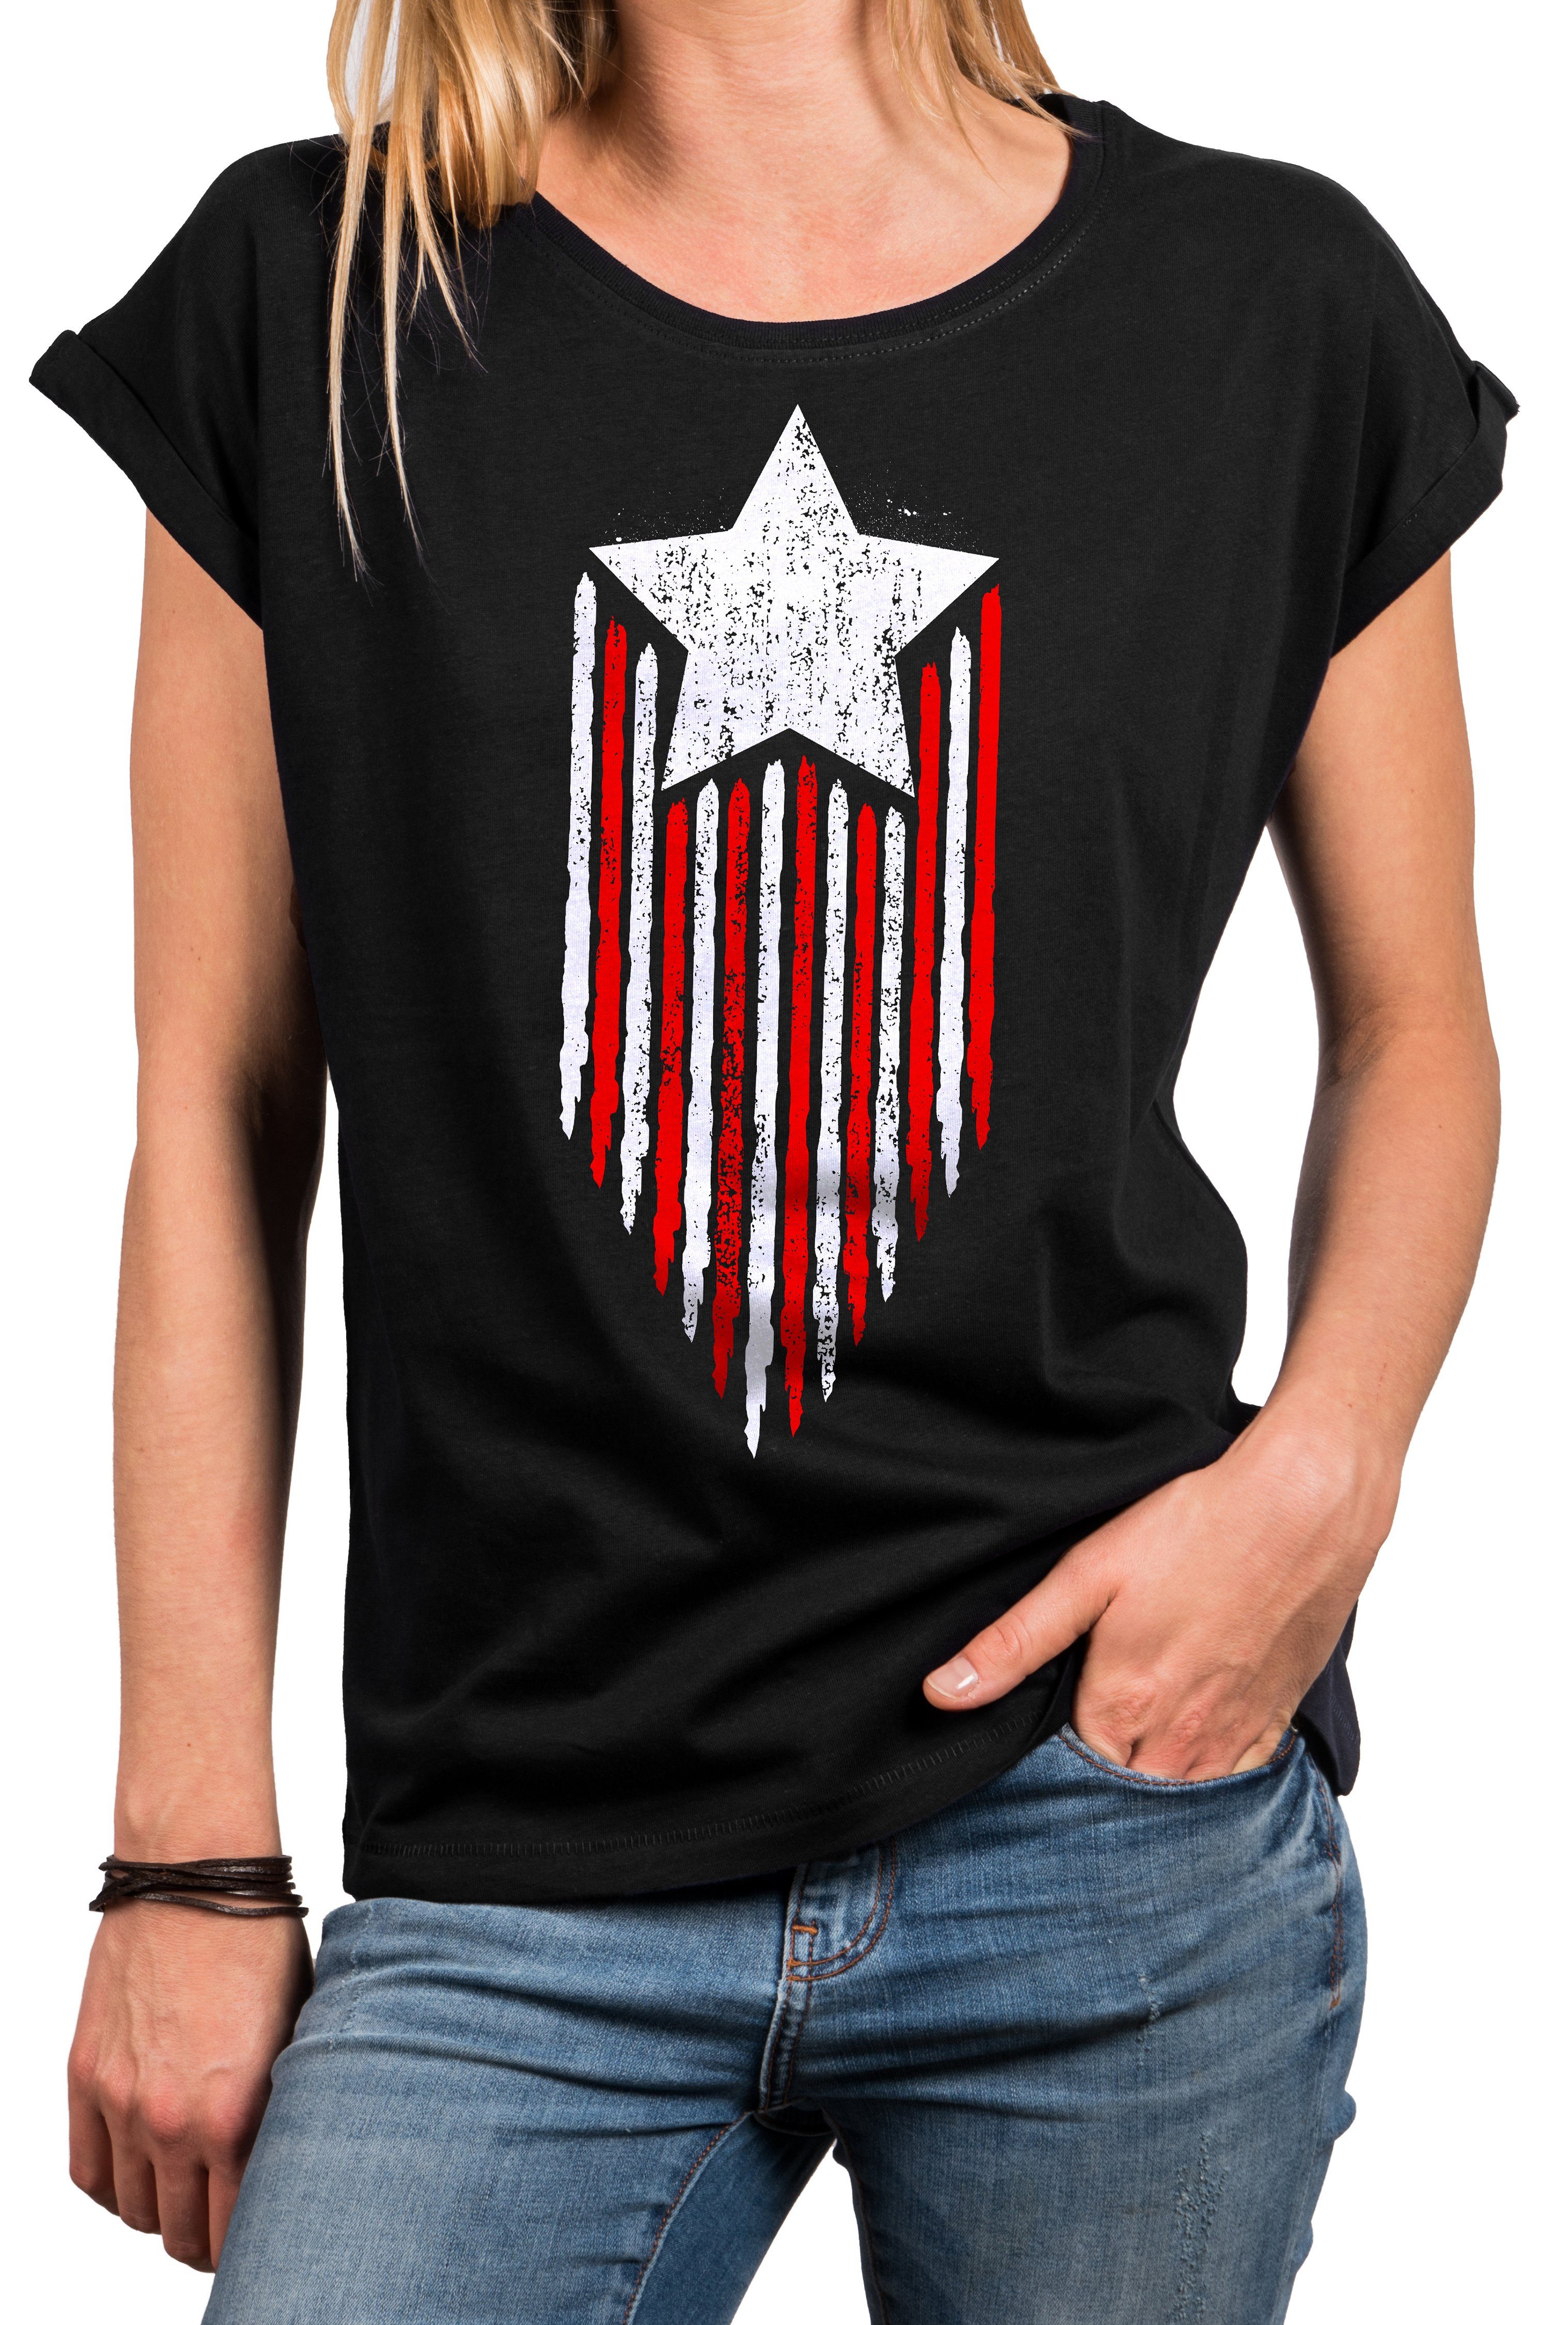 MAKAYA Print-Shirt Vintage Amerika große Damen Schwarz amerikanische Fahne Top Kurzarmshirt, Flagge Größen